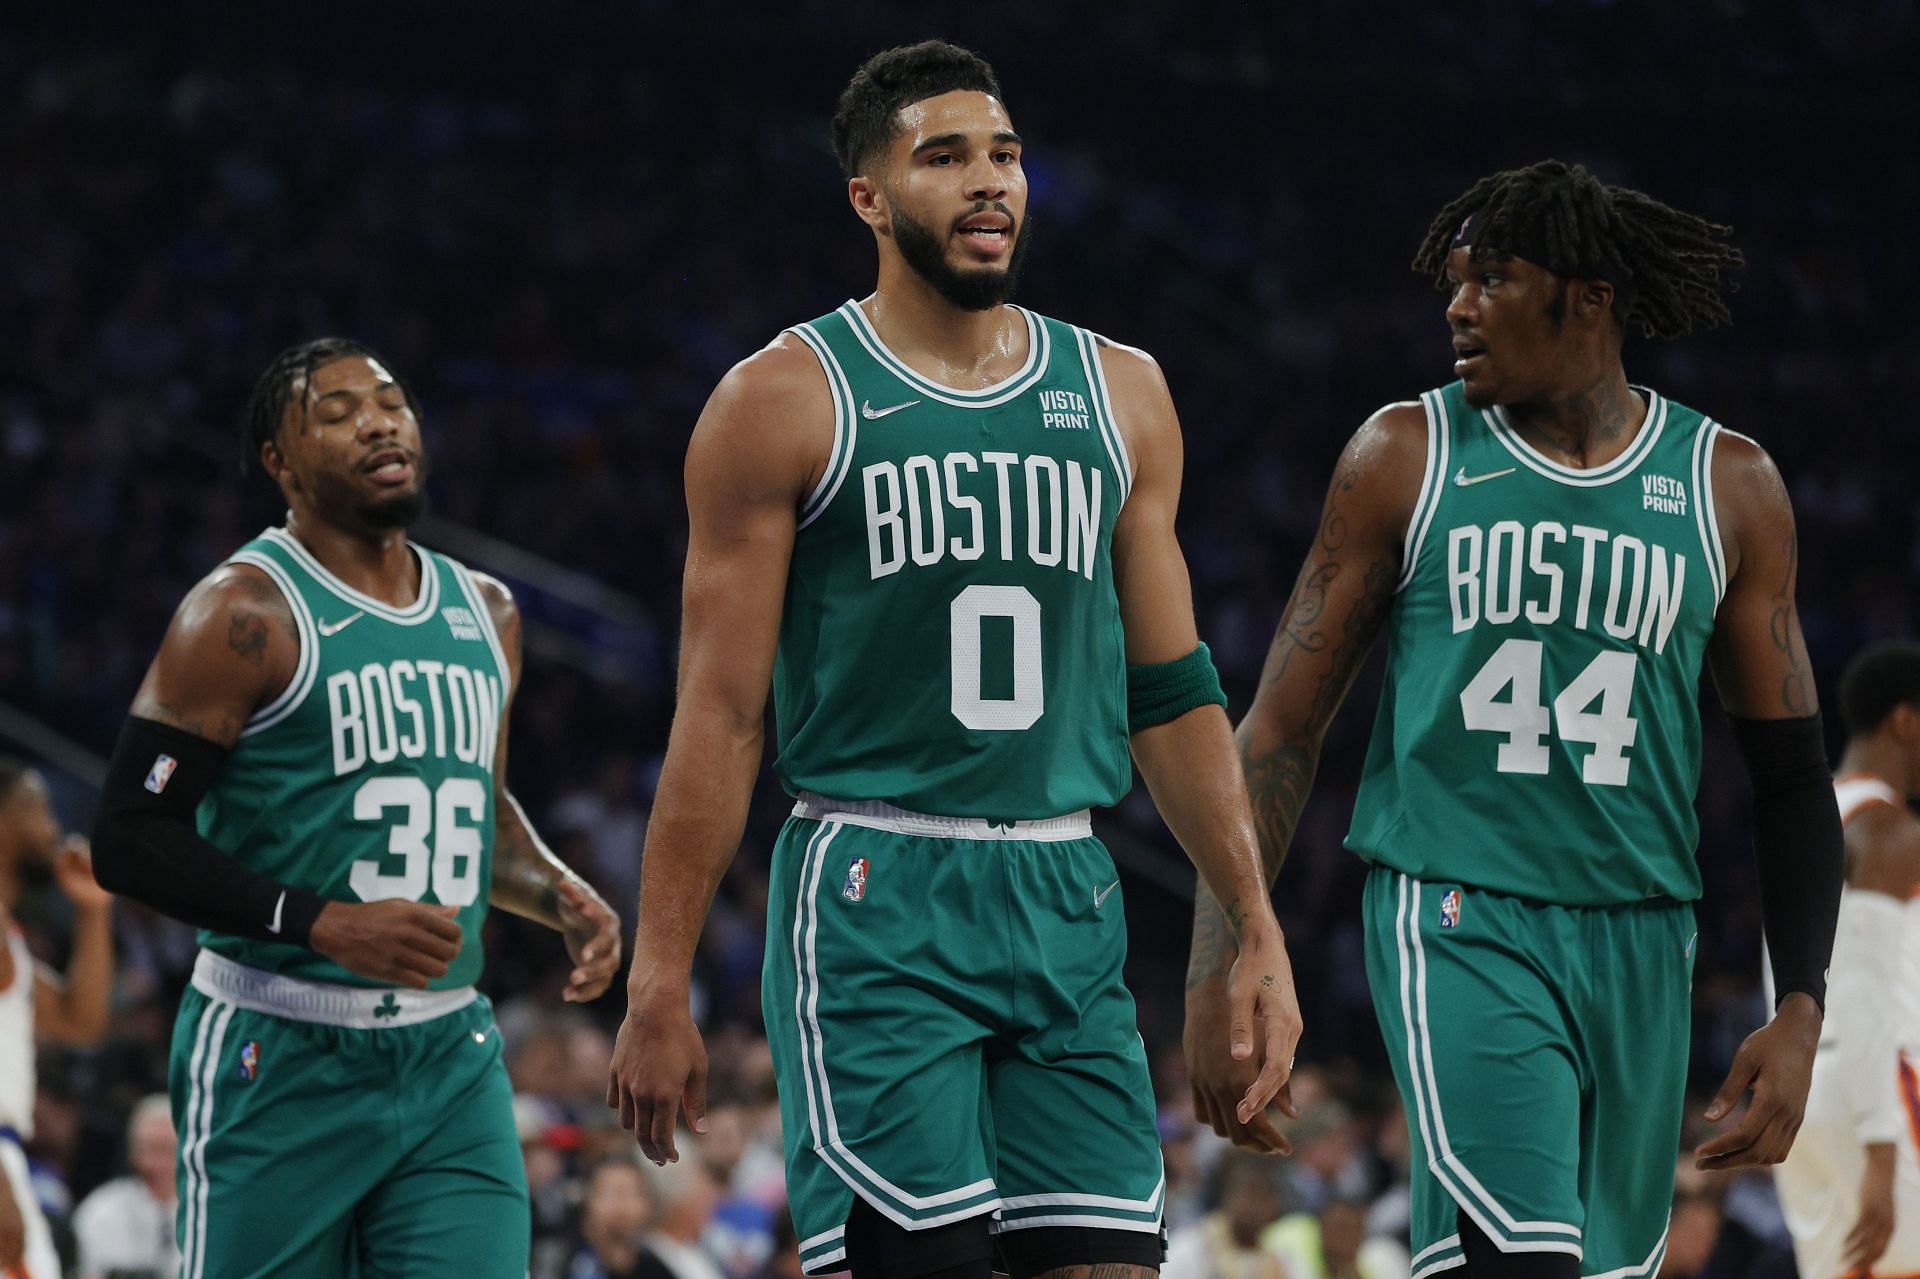 Boston Celtics against the New York Knicks at Madison Square Garden